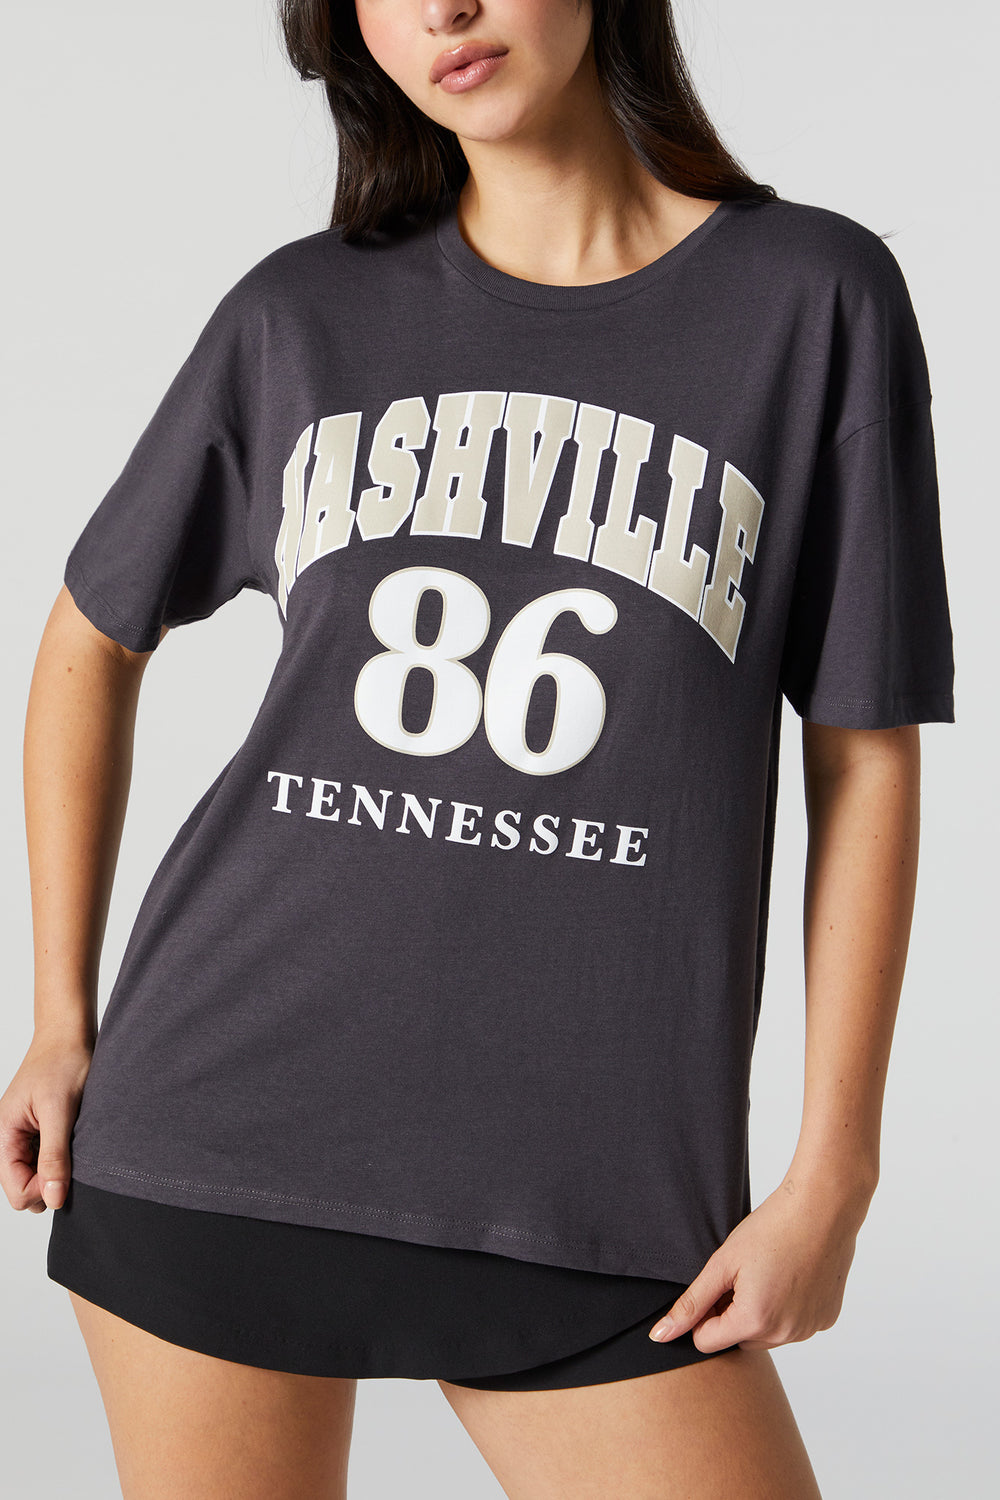 Nashville Graphic Boyfriend T-Shirt Nashville Graphic Boyfriend T-Shirt 4